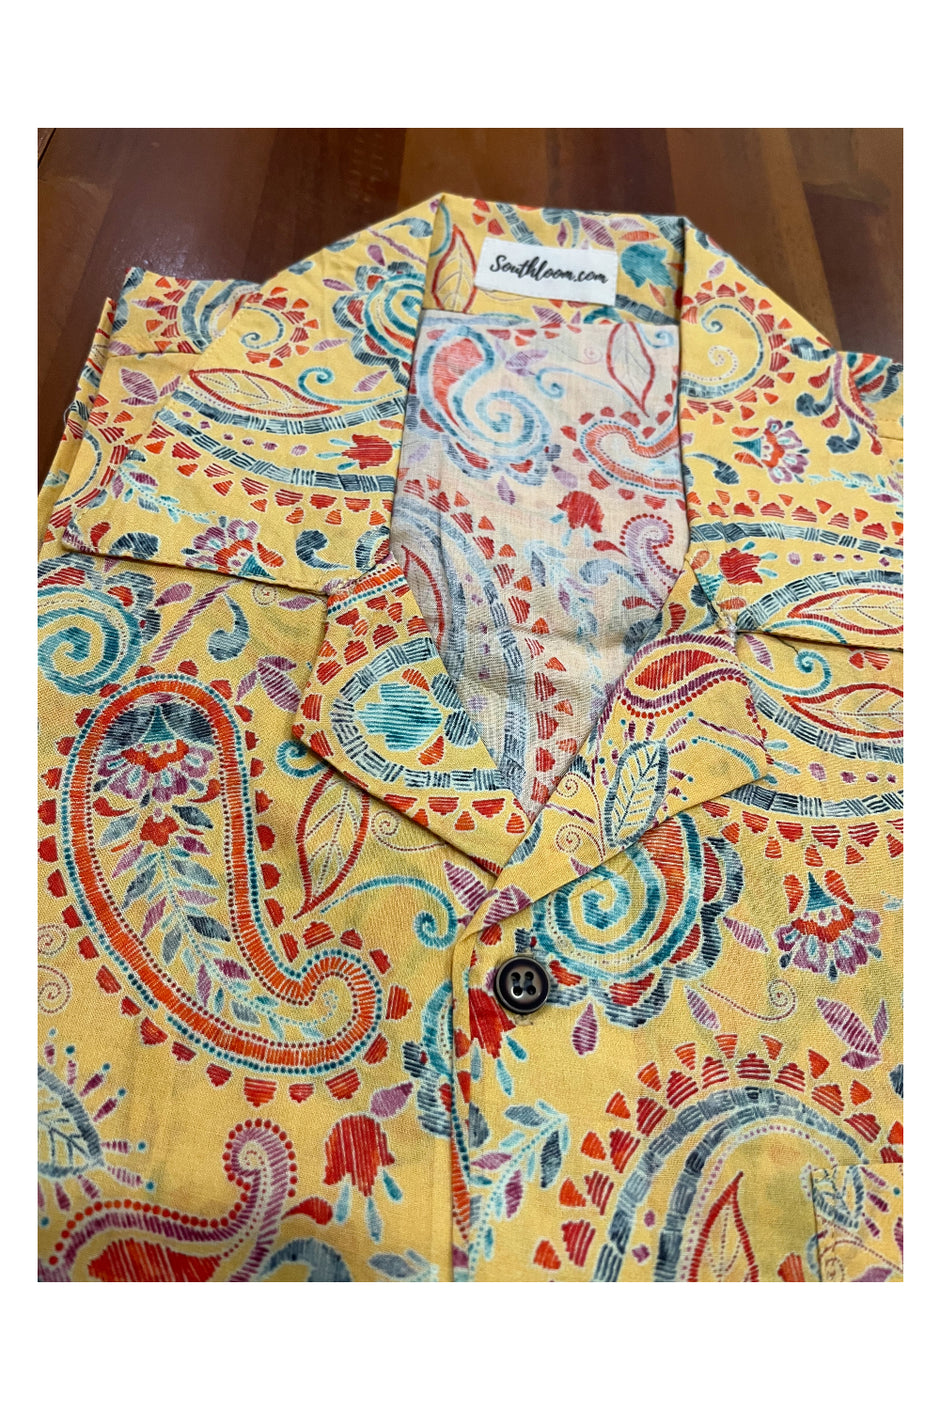 Jaipur Printed Shirts by Southloom.com – Southloom Handmade and Organics